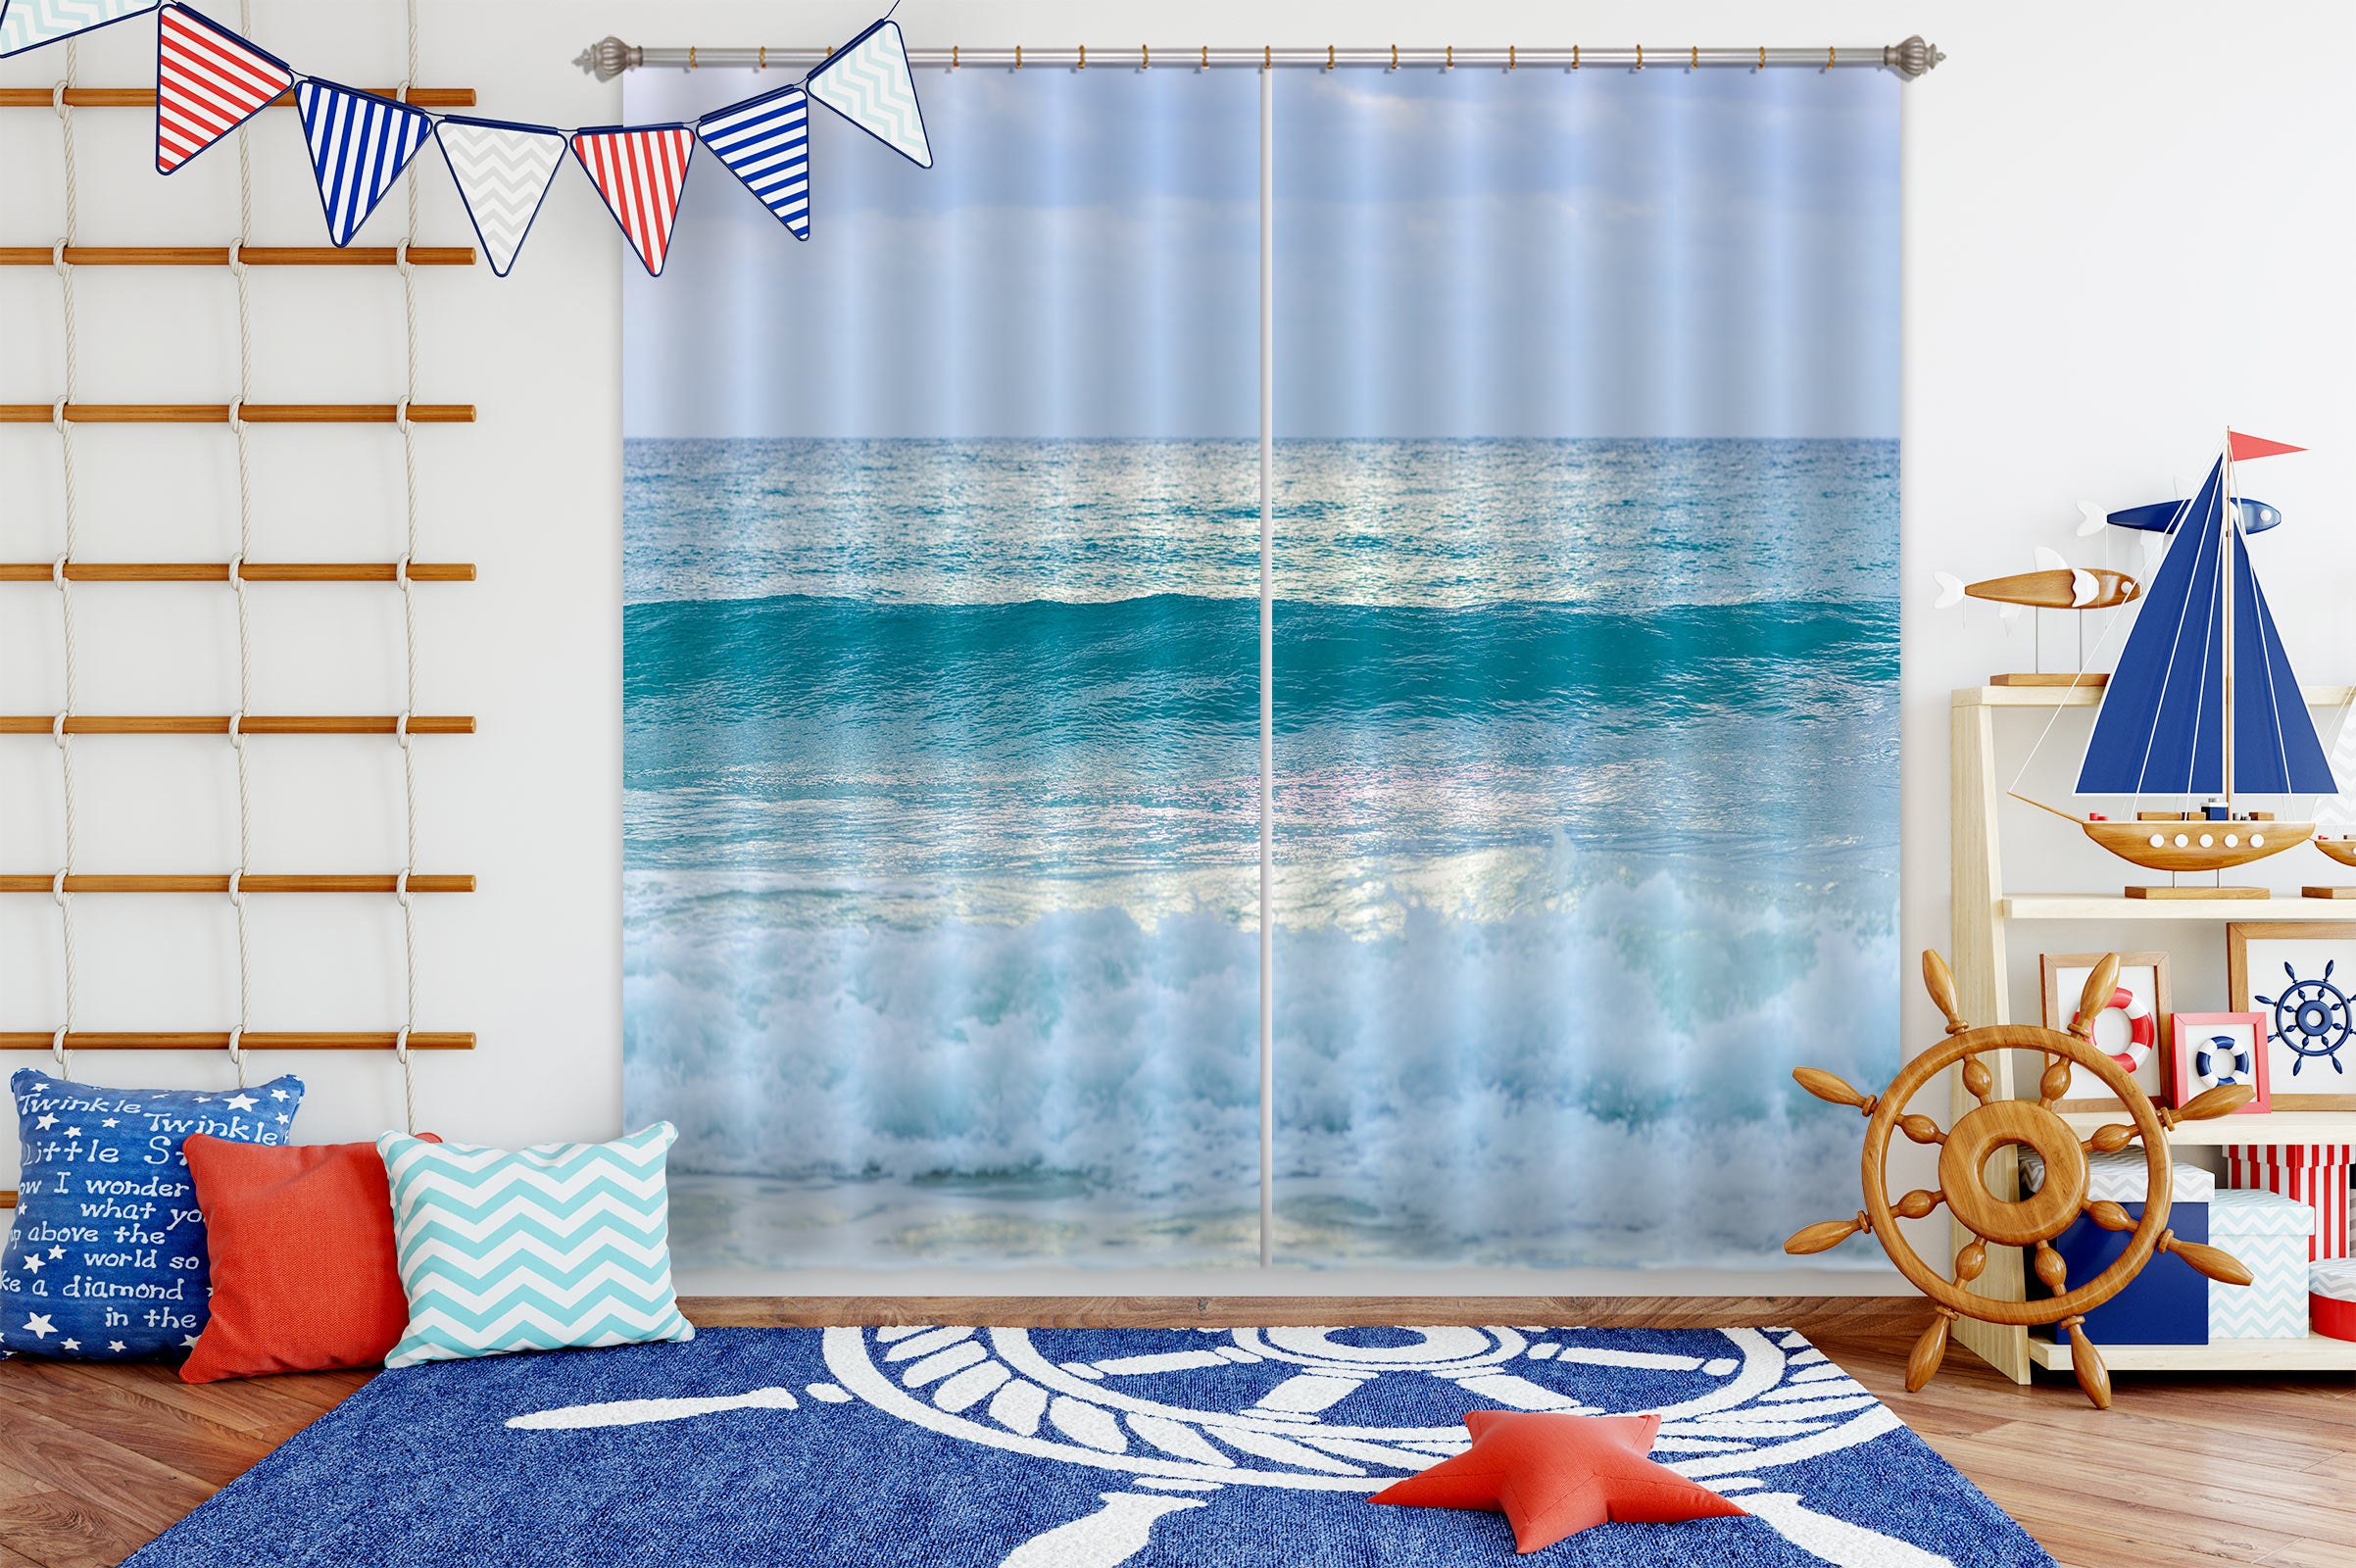 3D Sea Level 6539 Assaf Frank Curtain Curtains Drapes